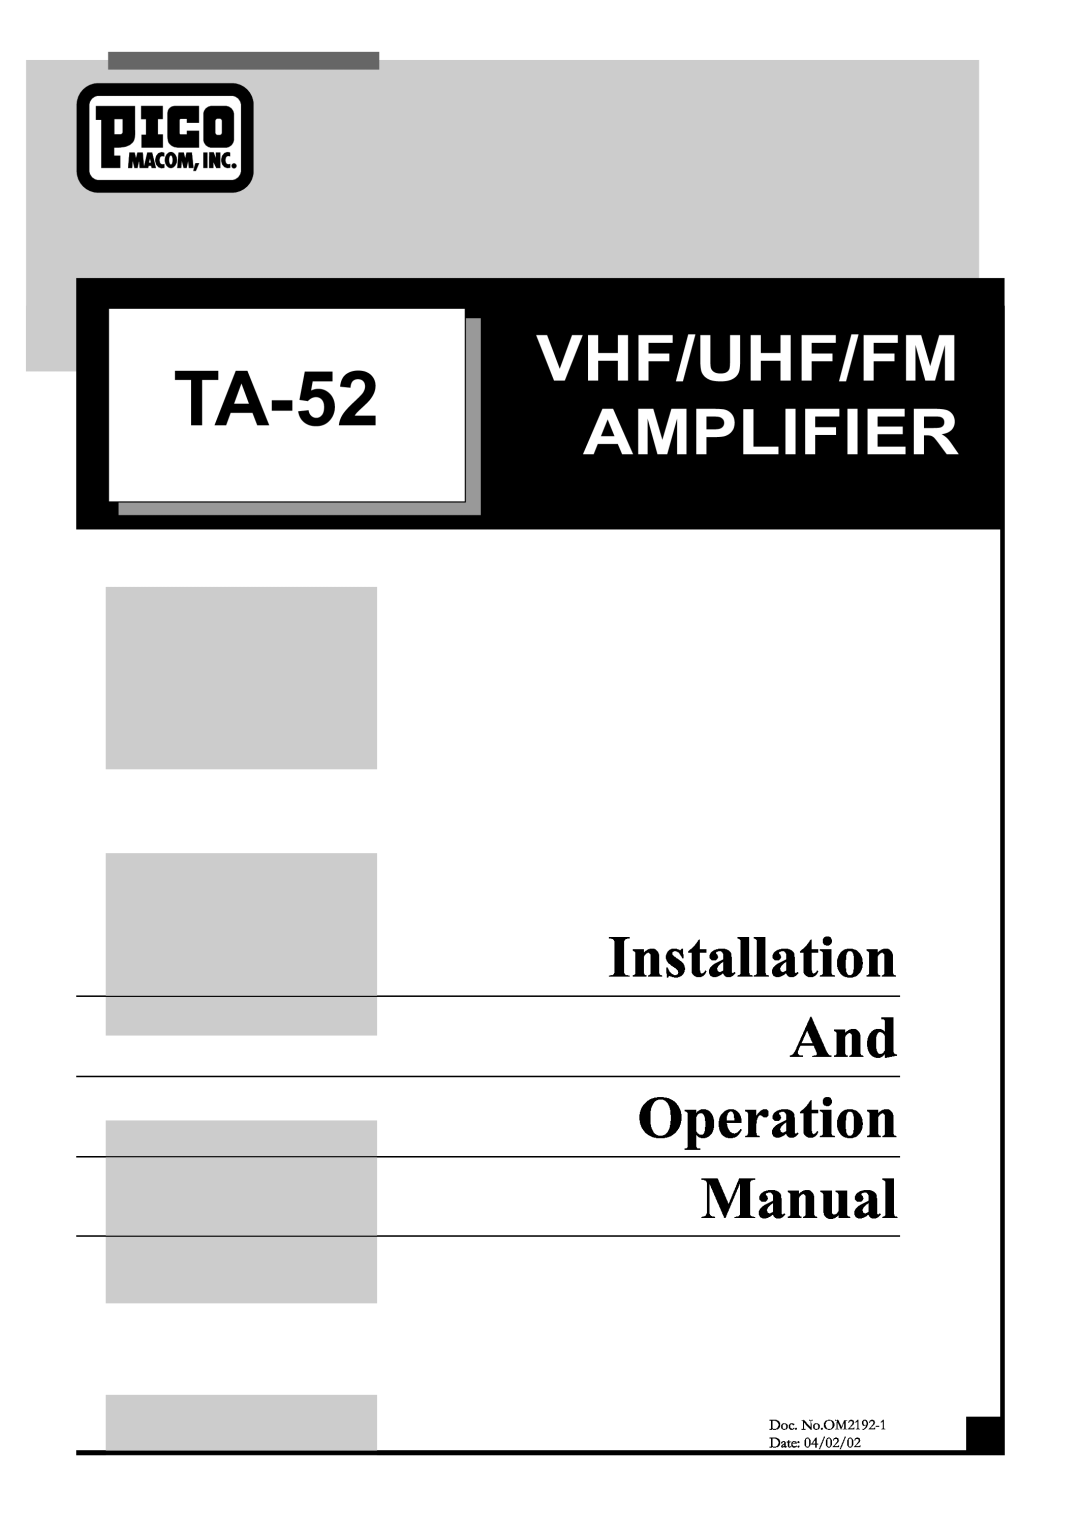 Pico Macom TA-52 operation manual Vhf/Uhf/Fm Amplifier, Doc. No.OM2192-1 Date 04/02/02 